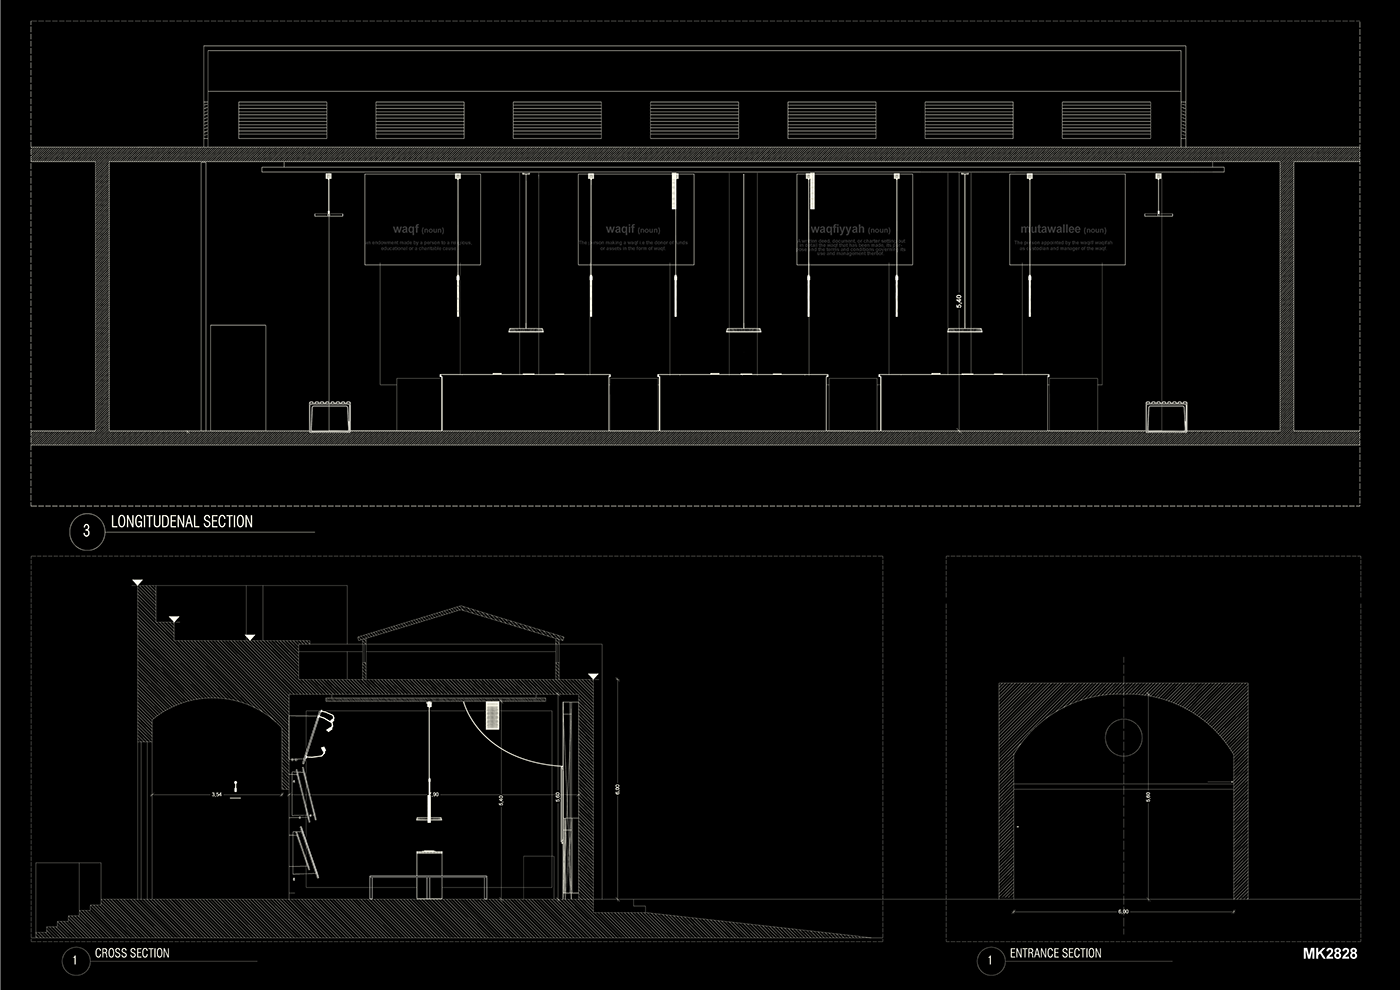 booth Biennale biennale di venezia research architecture concept